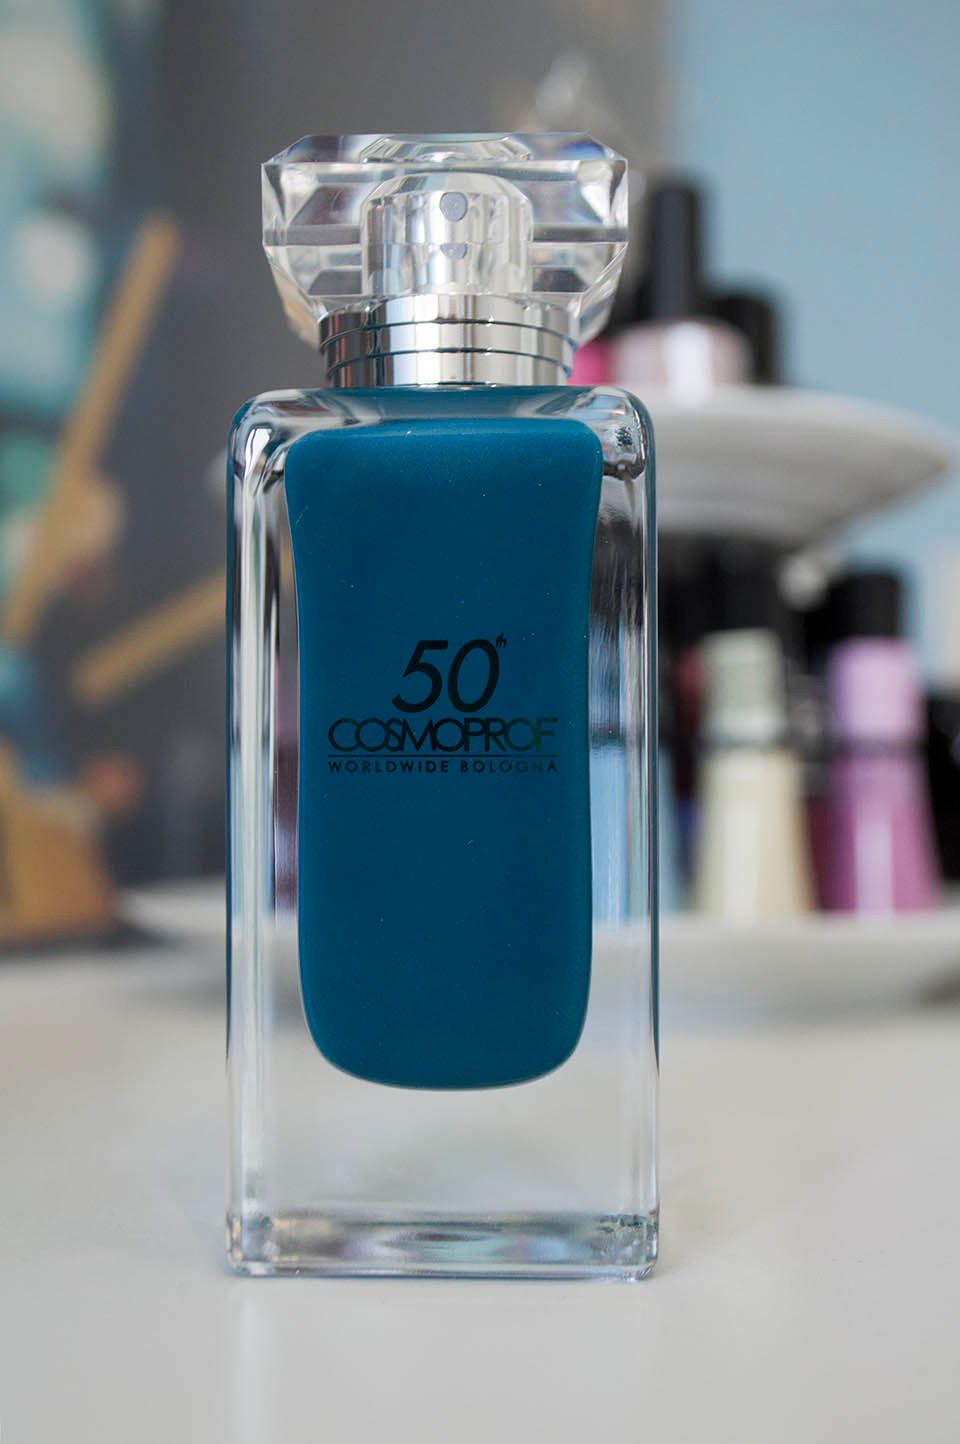 Perfume Cosmoprof 50